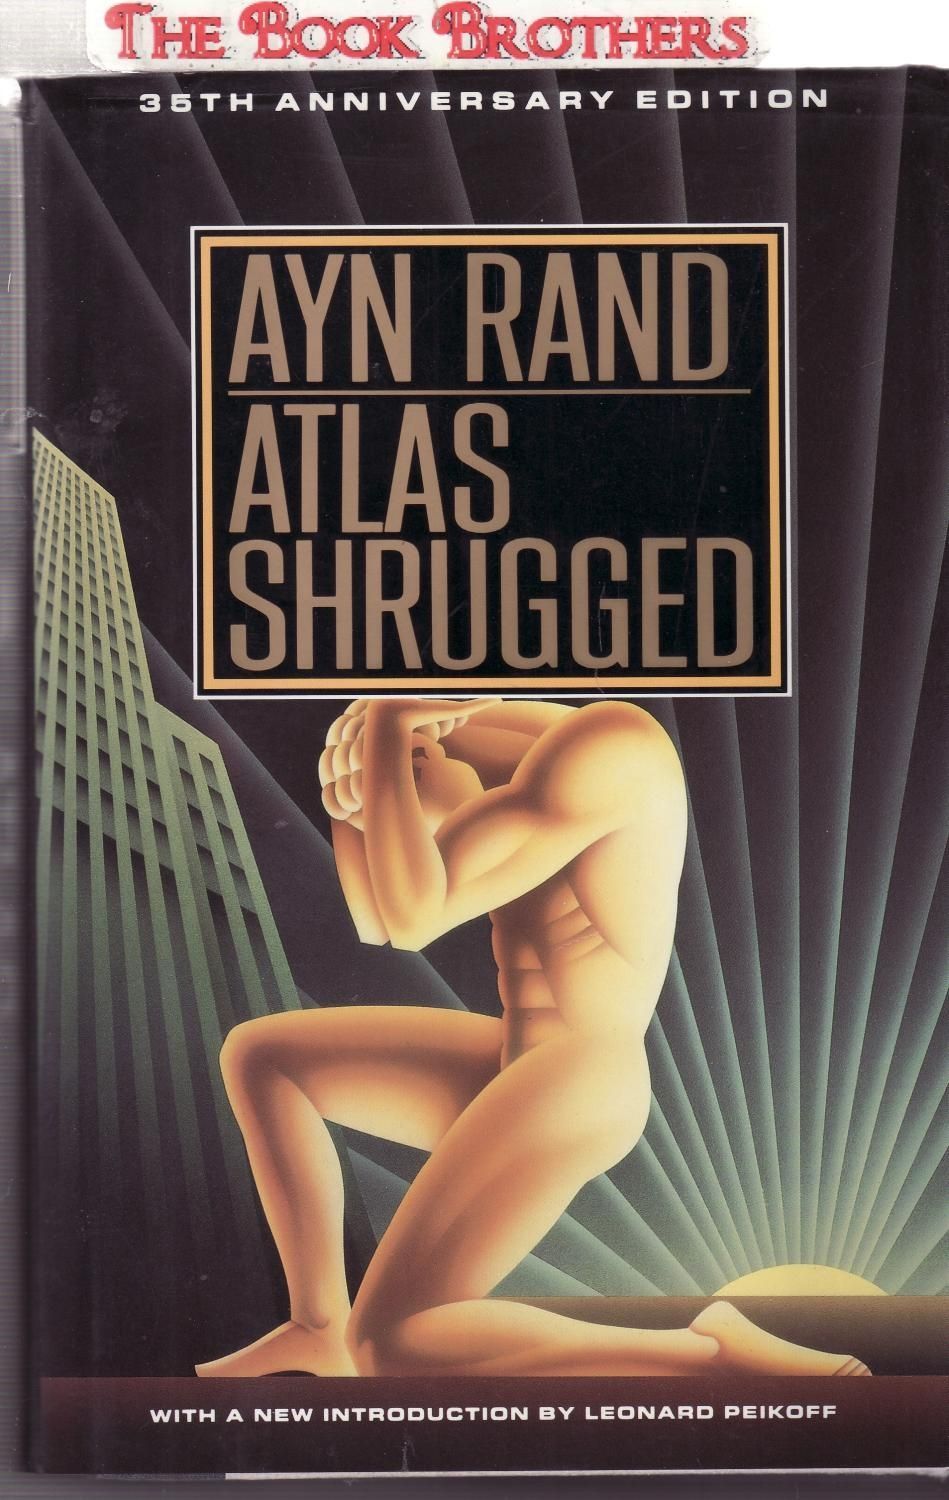 Atlas Shruggedayn Rand – Abebooks Pertaining To Atlas Shrugged Cover Art (View 10 of 20)